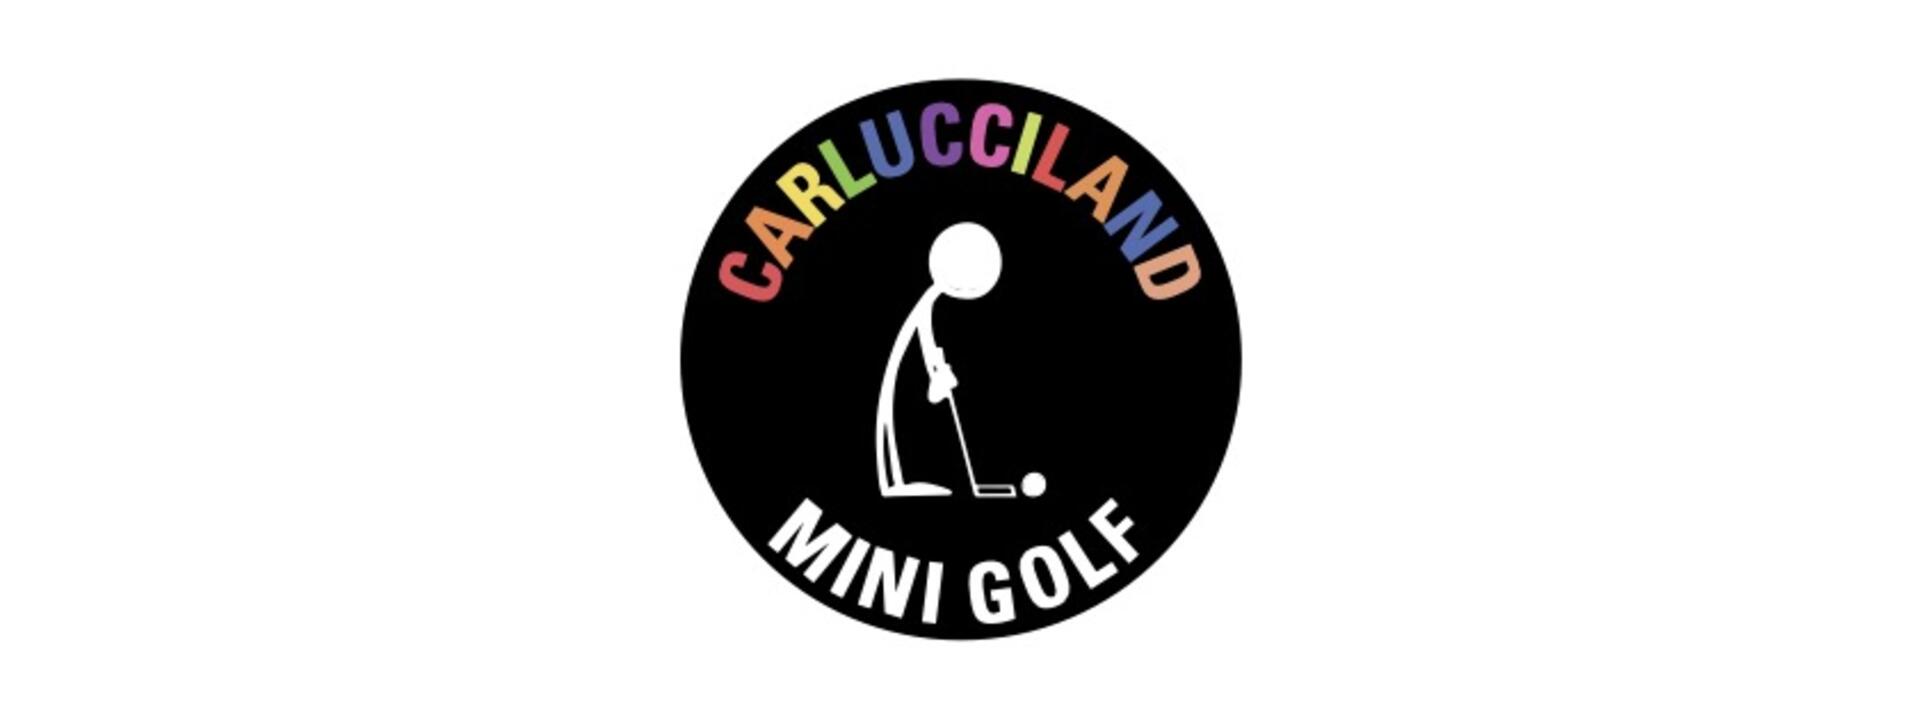 carlucci land logo (2).jpg